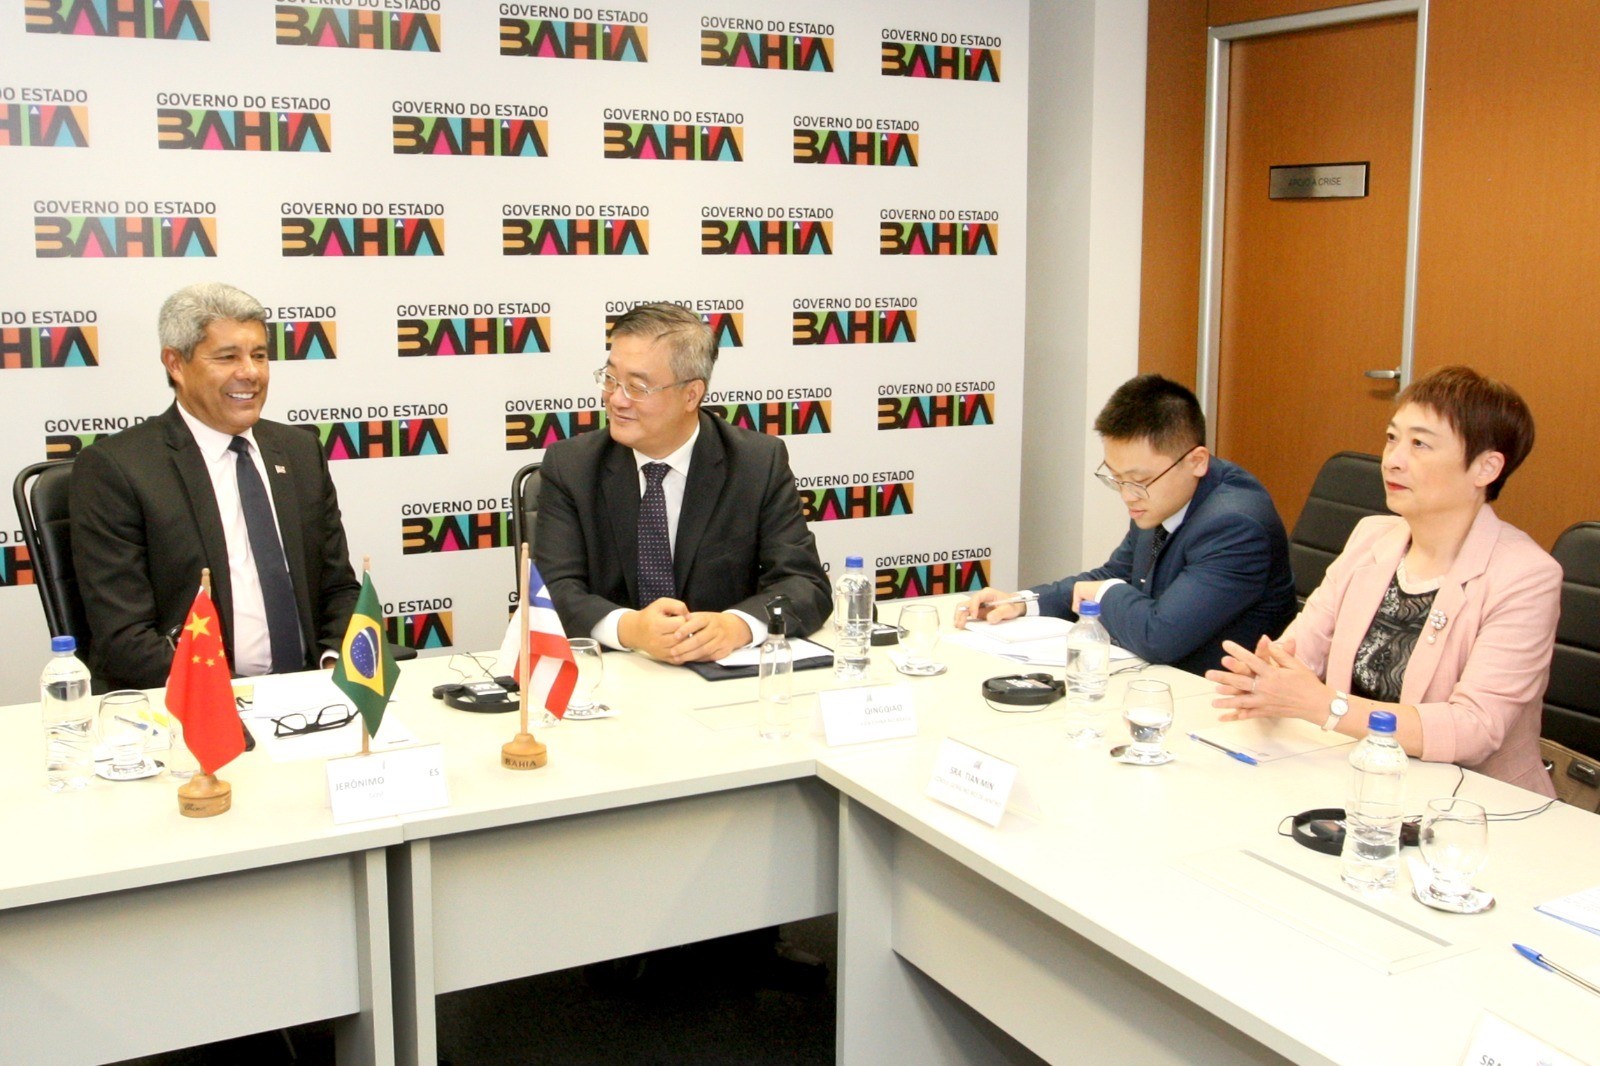 Governador da Bahia recebe embaixador da China para debater investimentos no estado